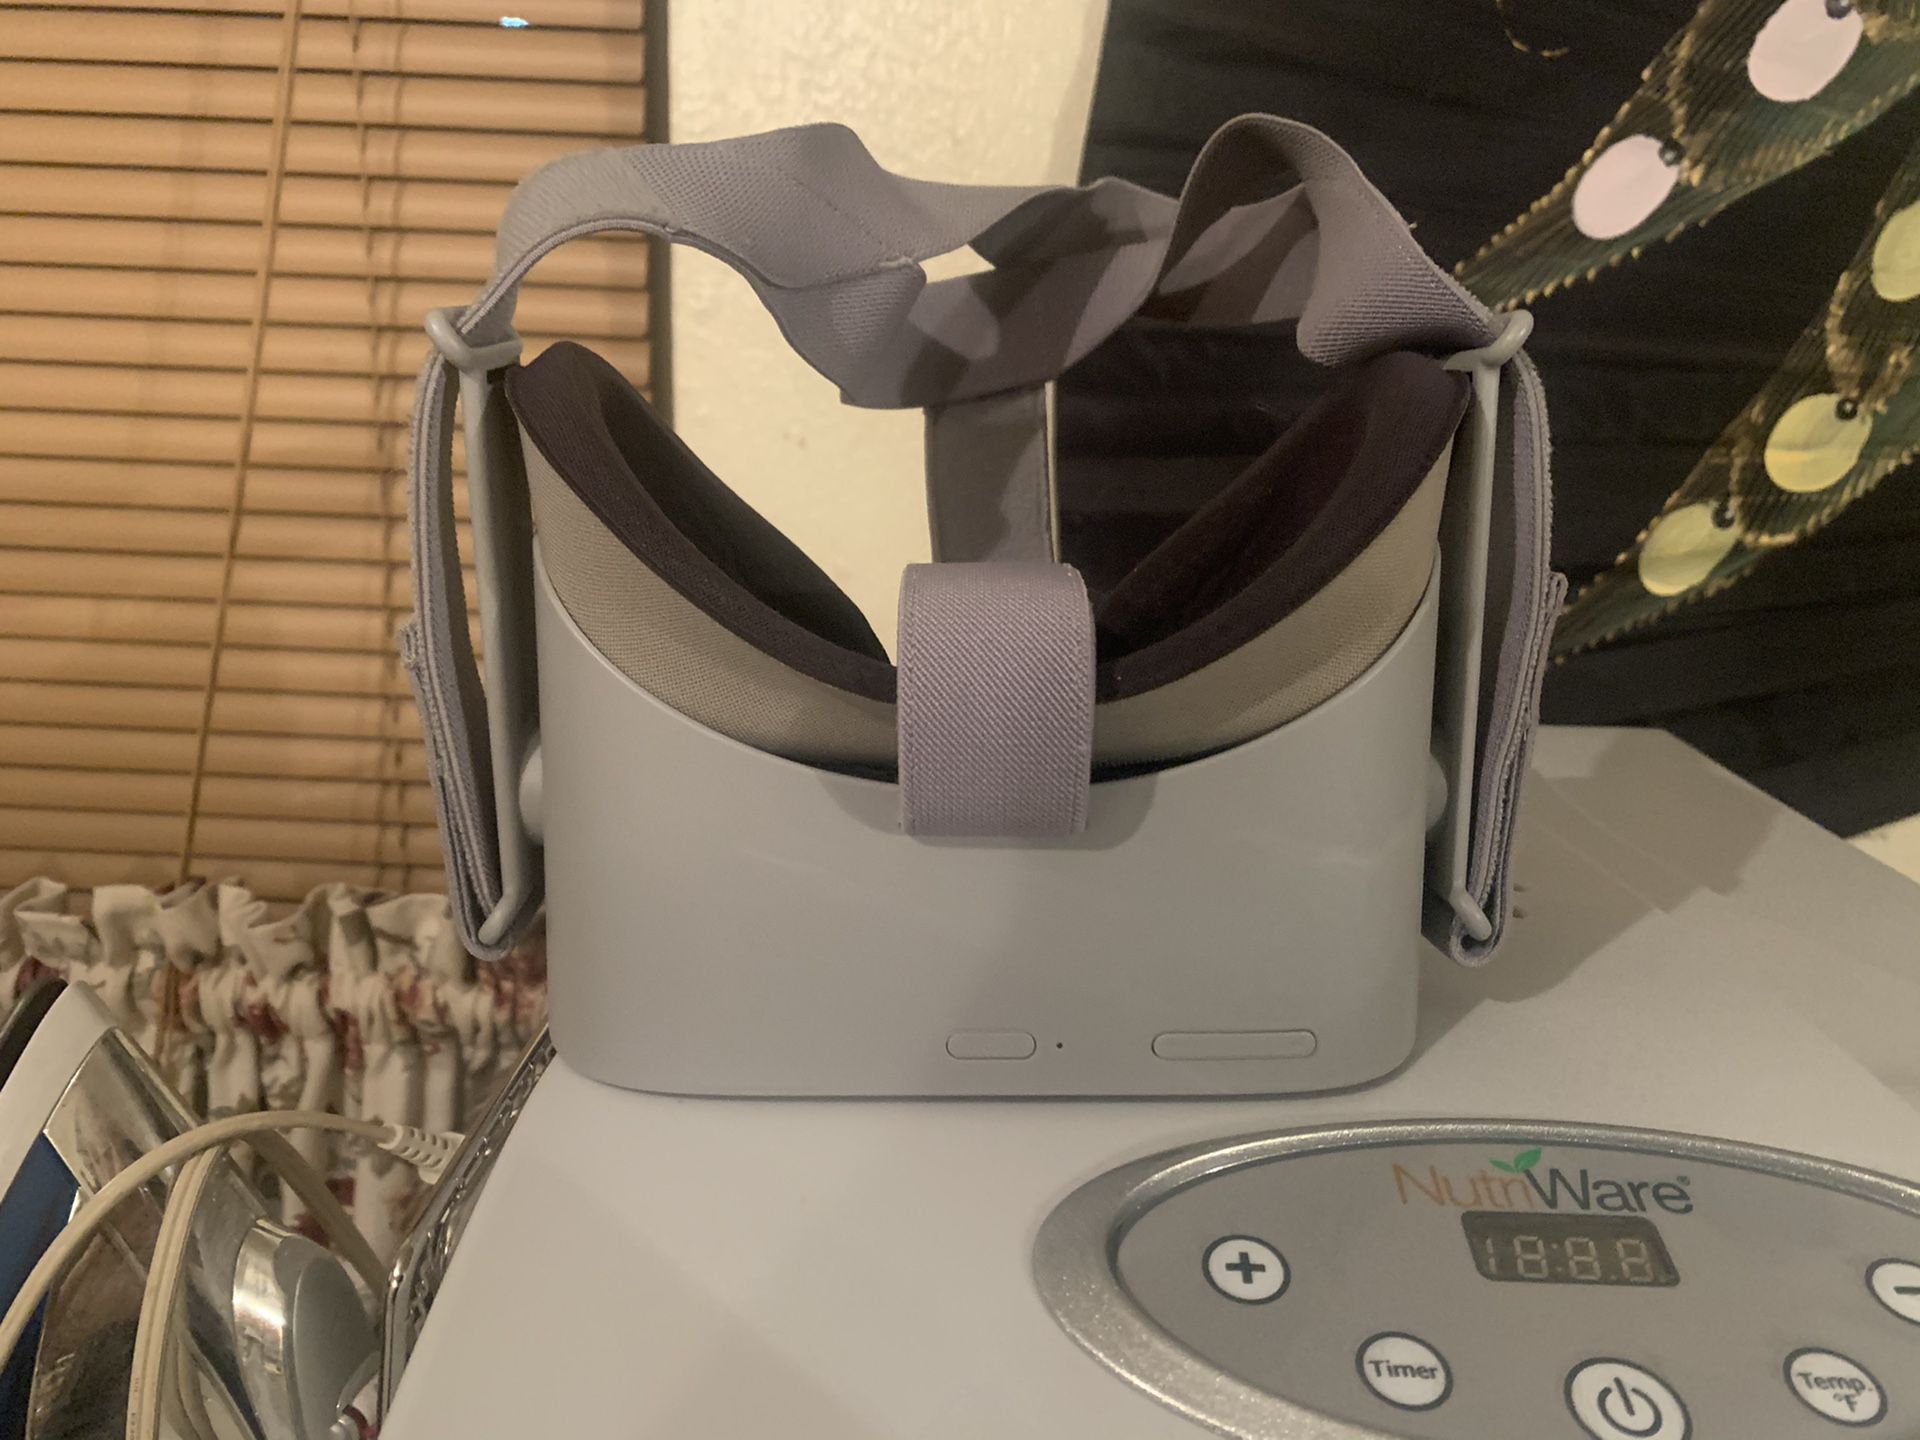 VR Oculus GO virtual reality